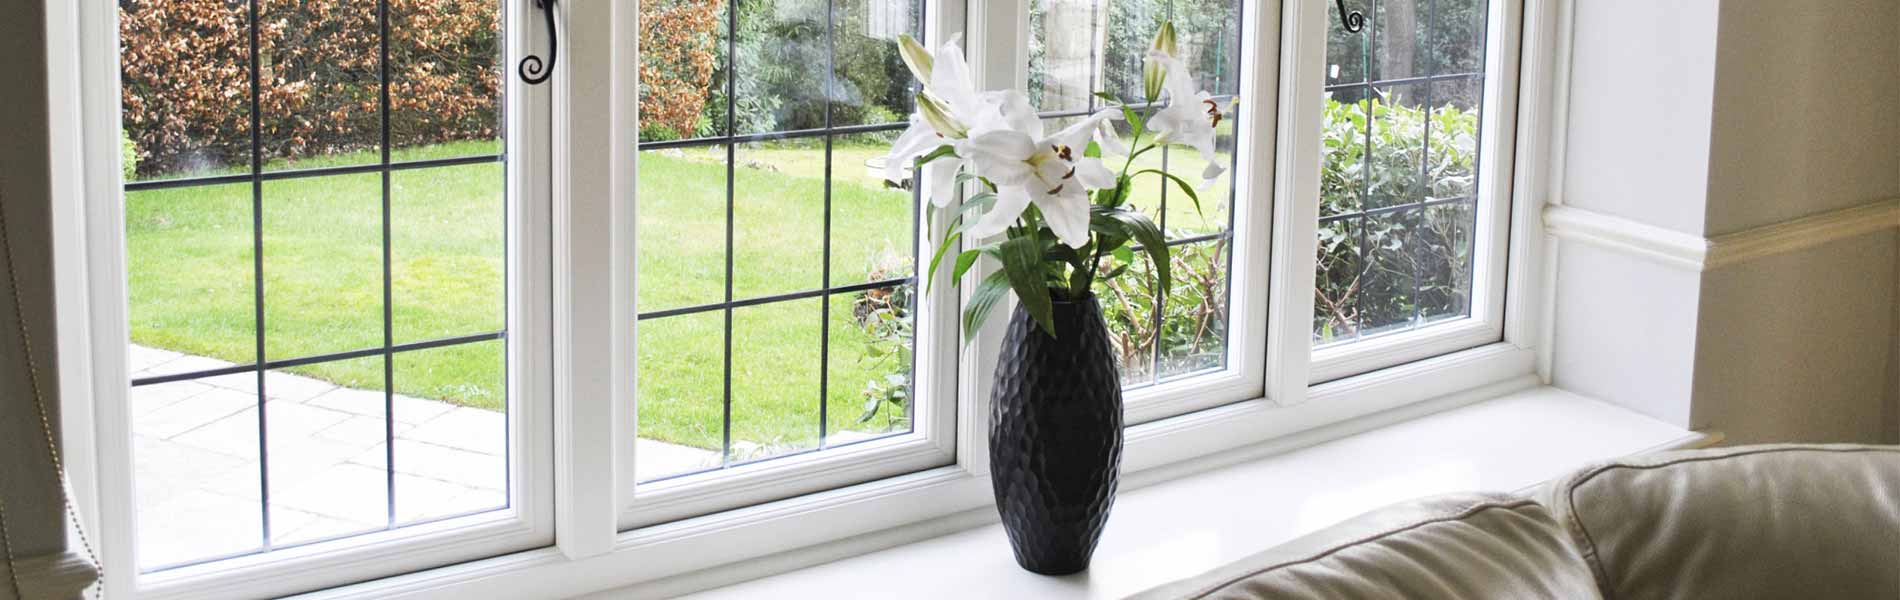 Olivair Home Improvements | Windows